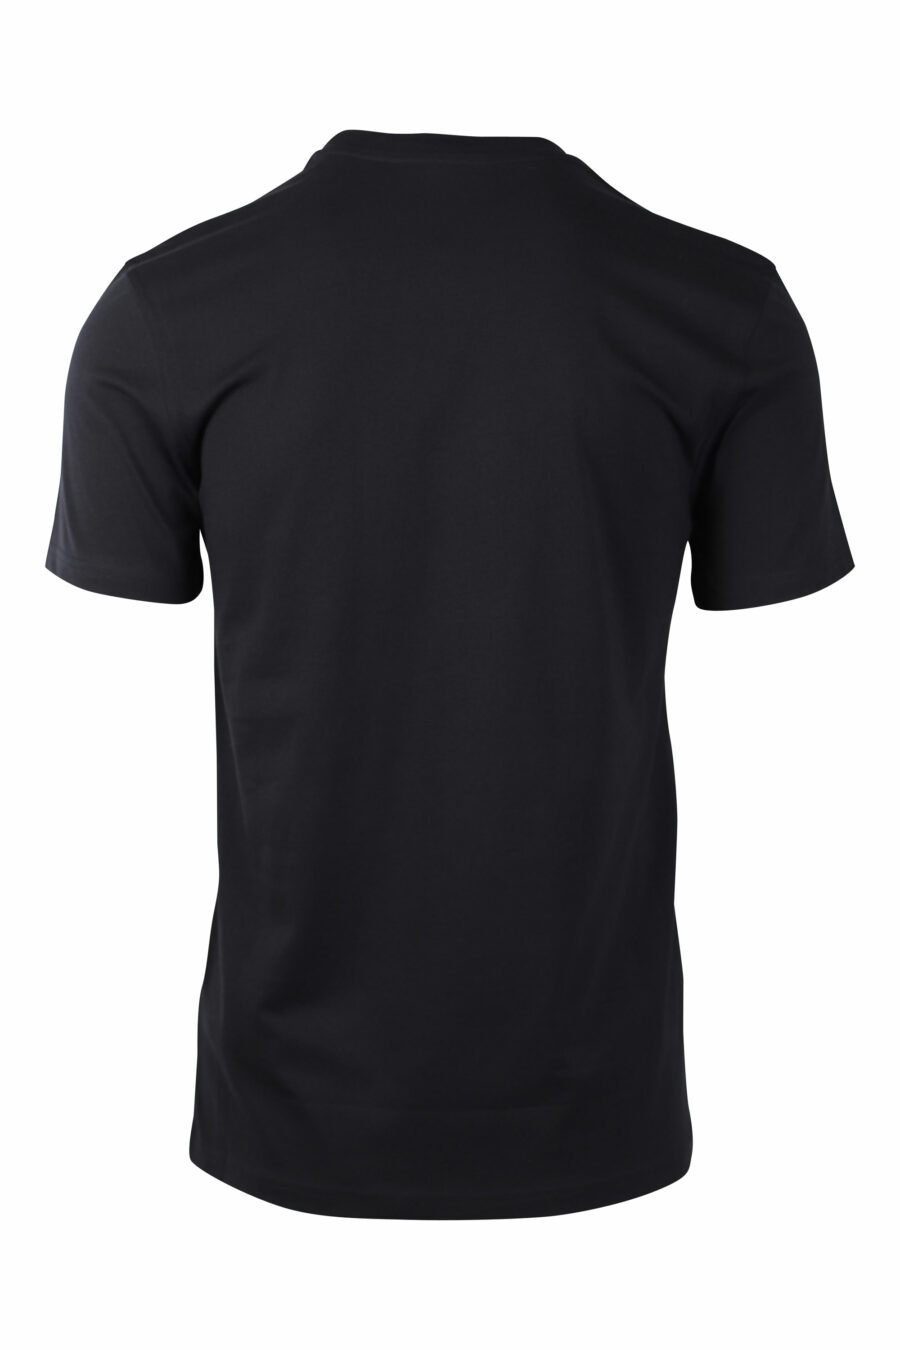 Black T-shirt with silver maxilogo - IMG 1468